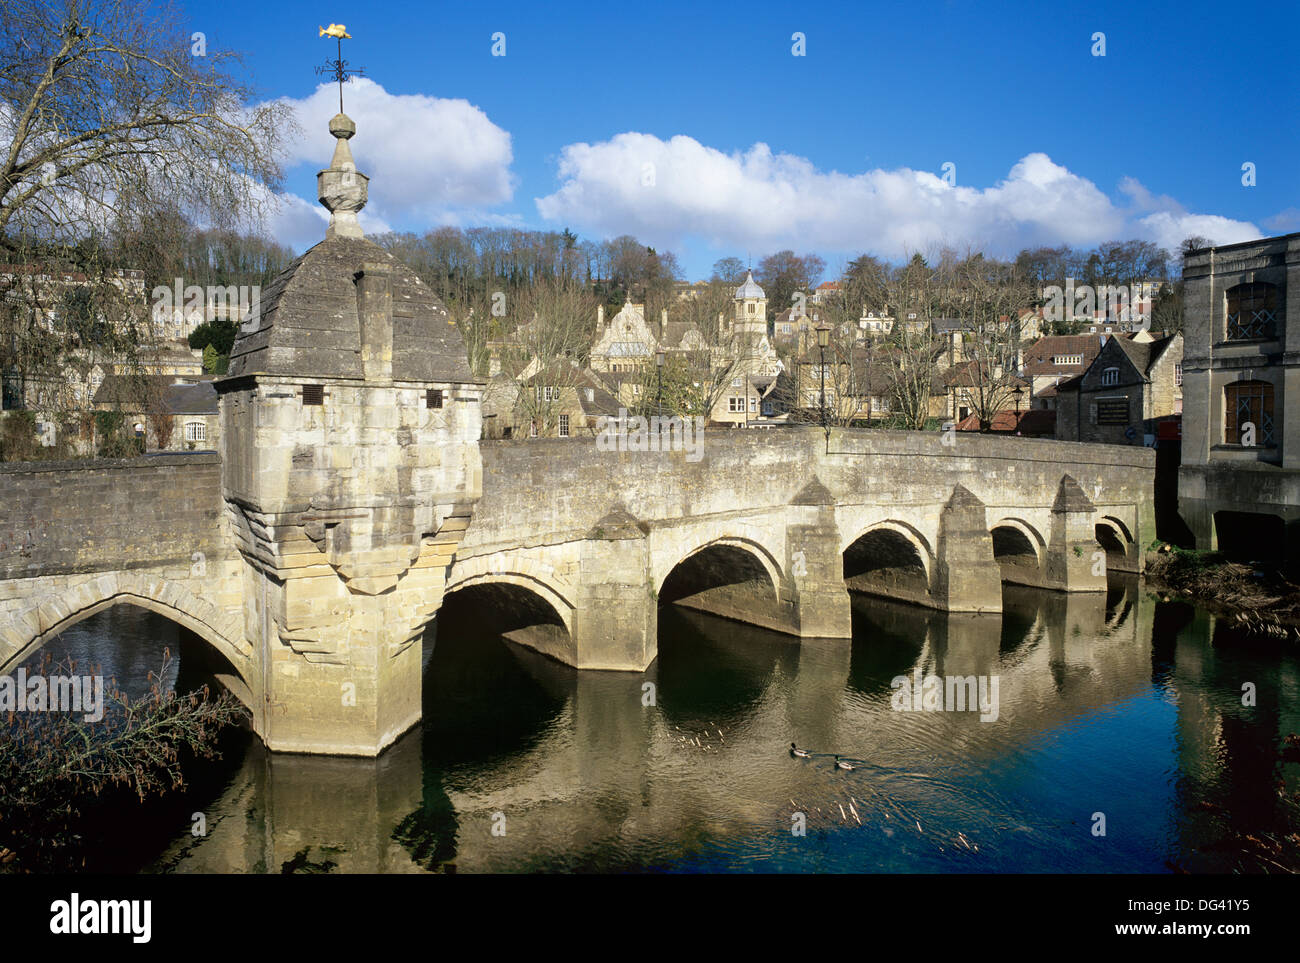 The Town Bridge over the River Avon, Bradford on Avon, Wiltshire, England, United Kingdom, Europe Stock Photo